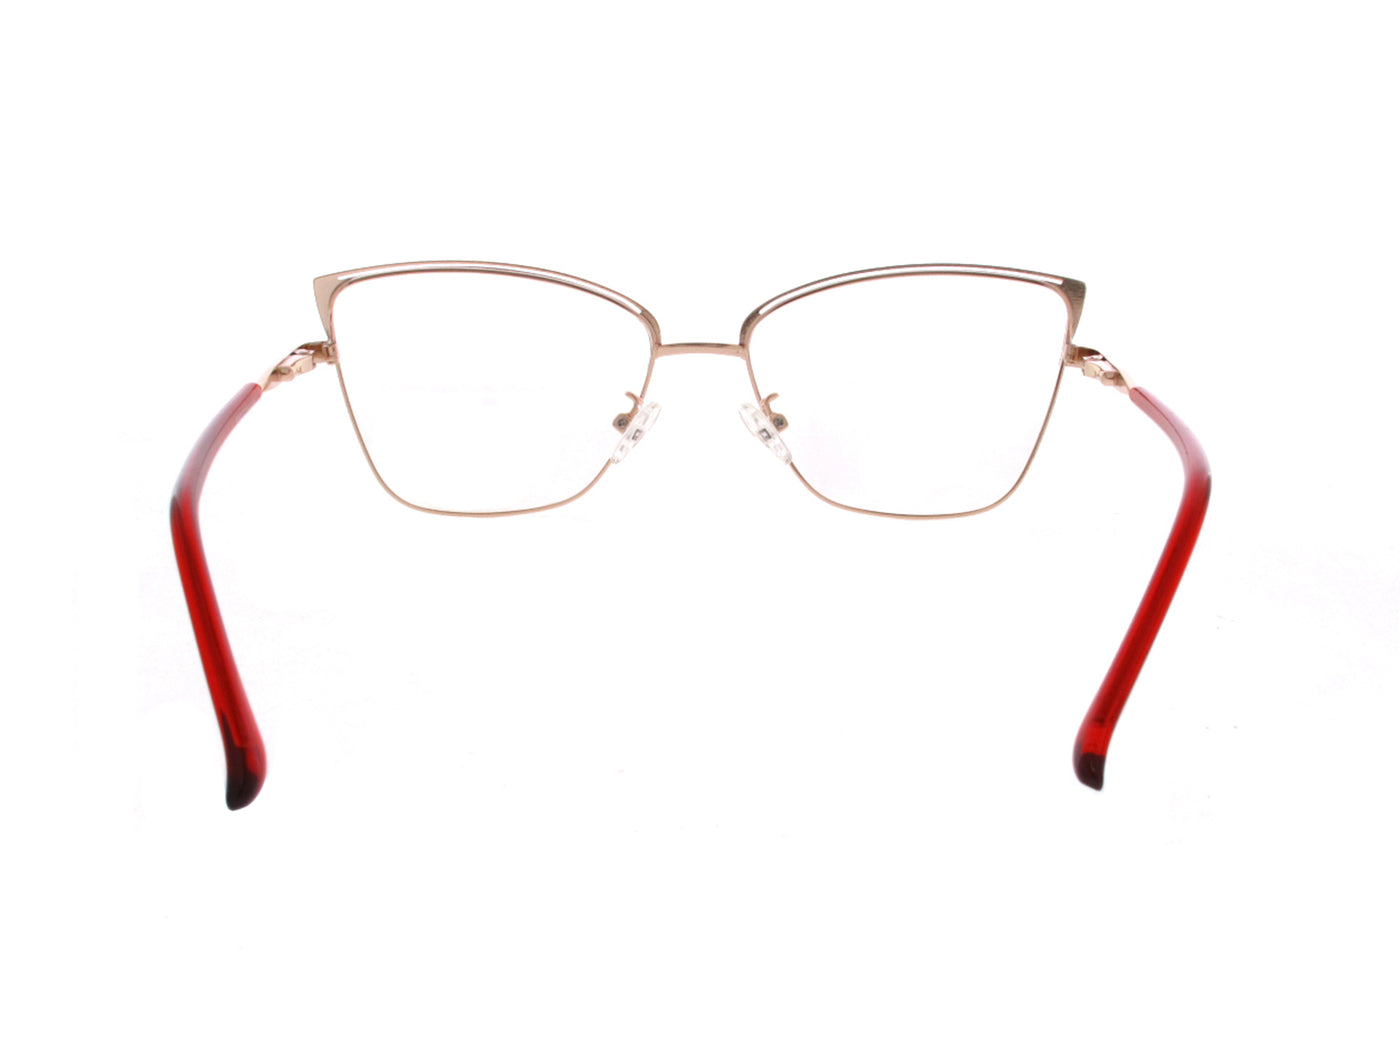 Cateye Glasses 750582